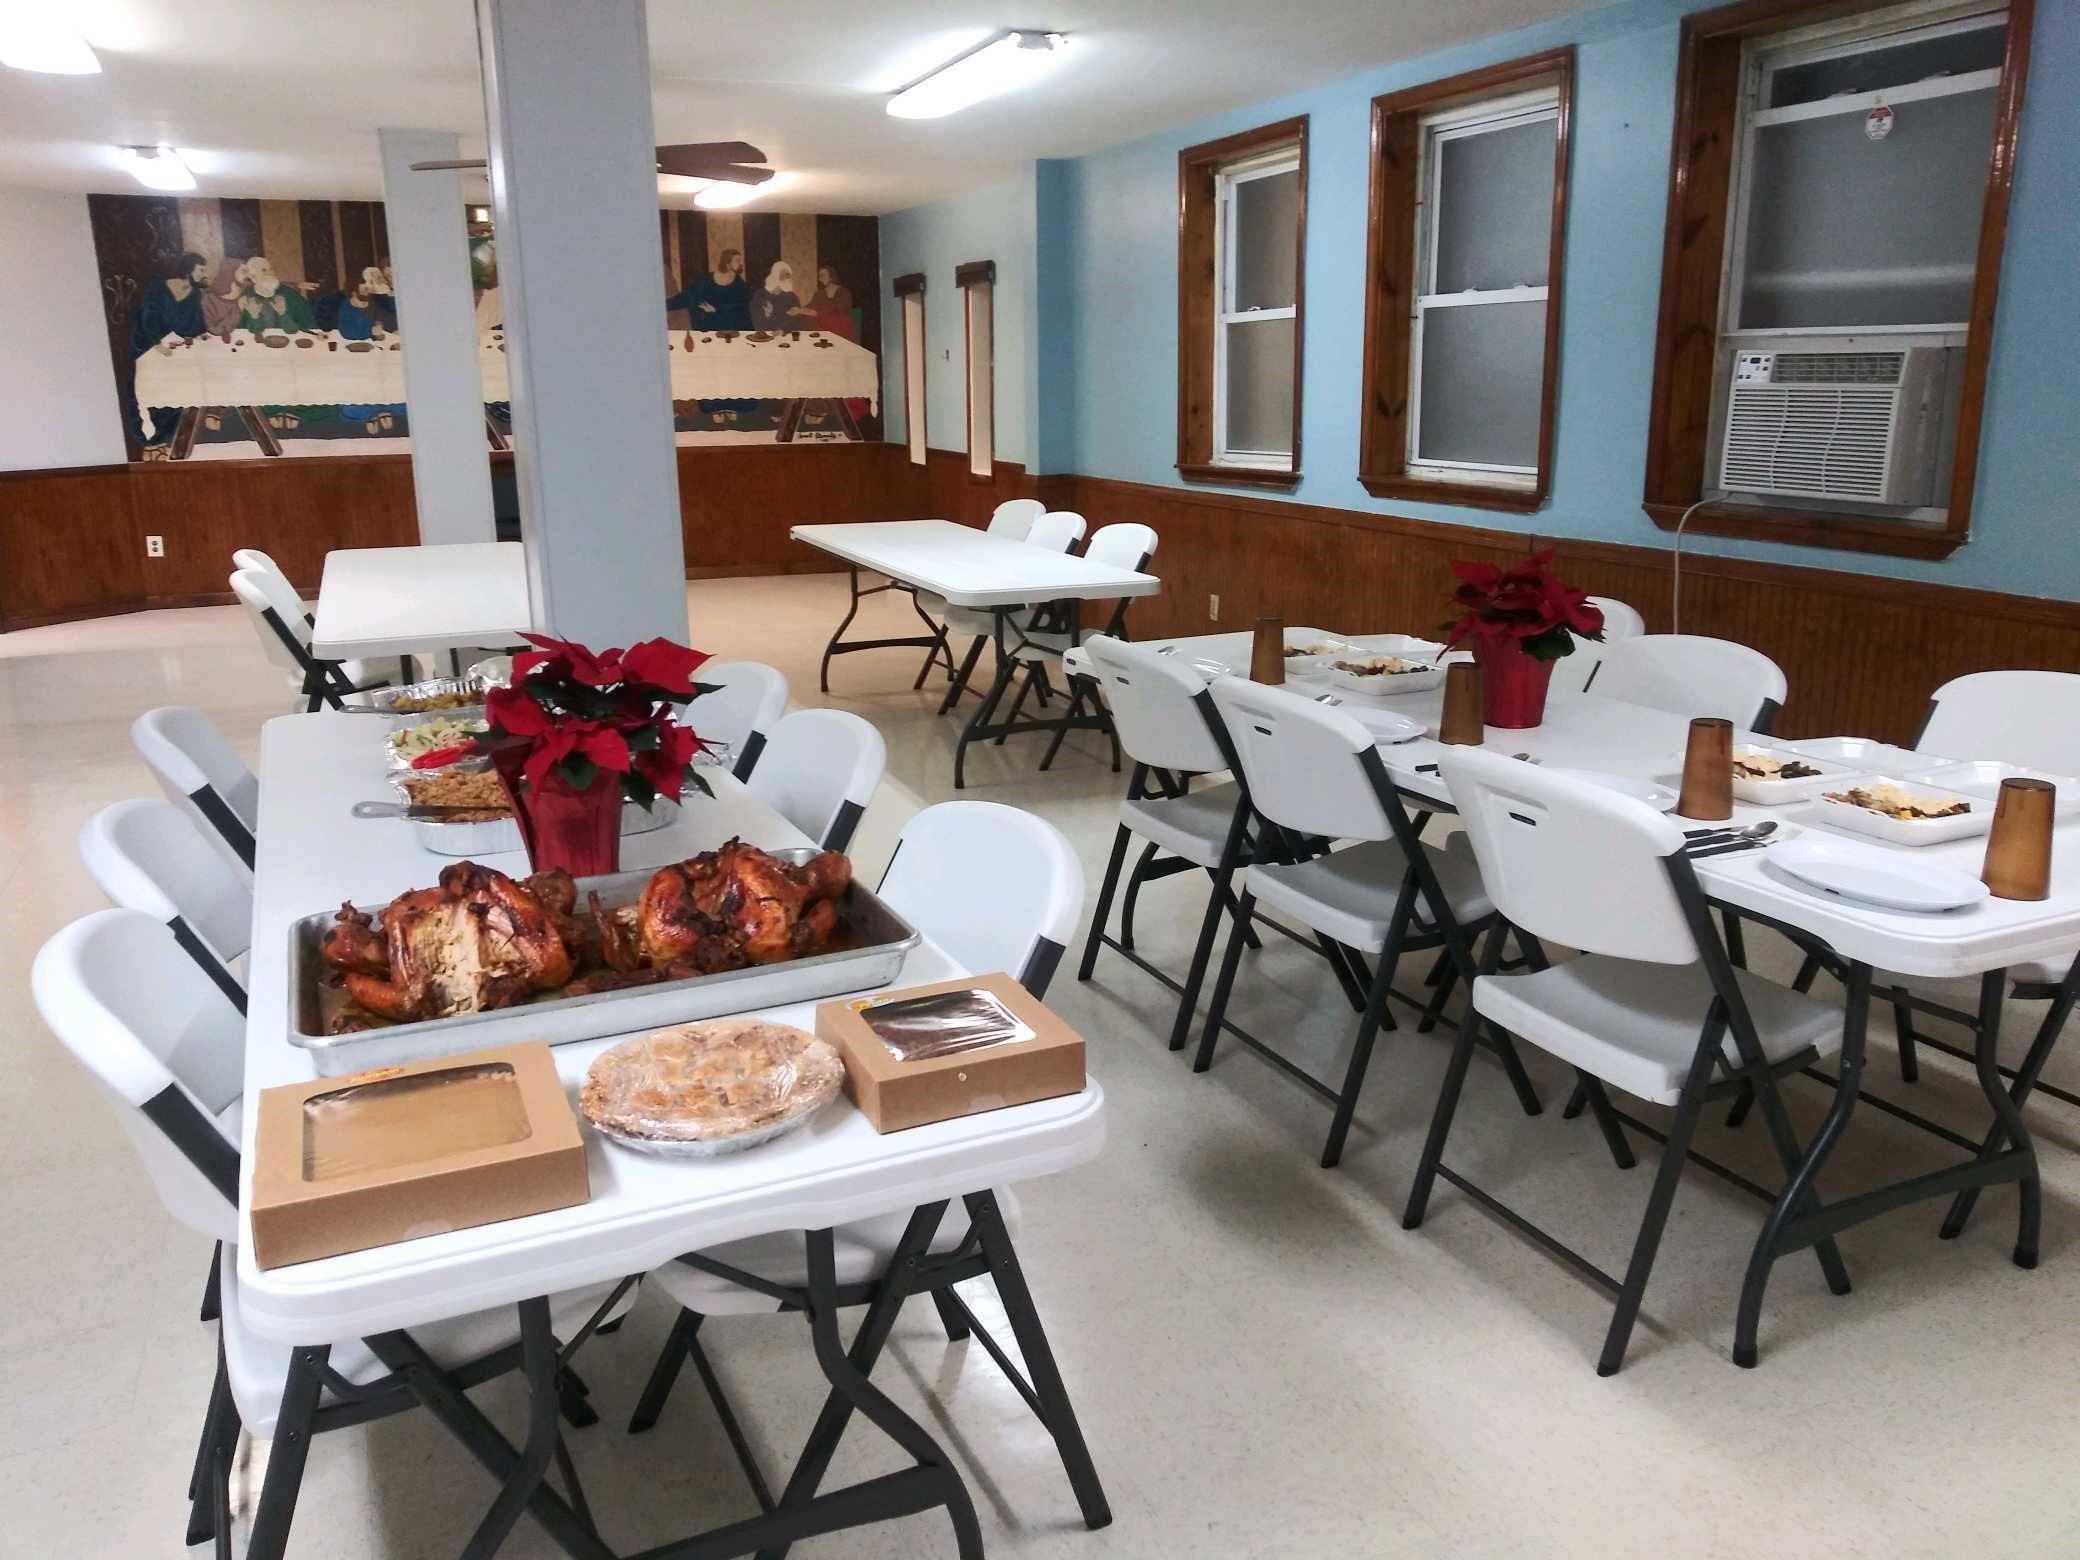 CREATE House's Thanksgiving feast